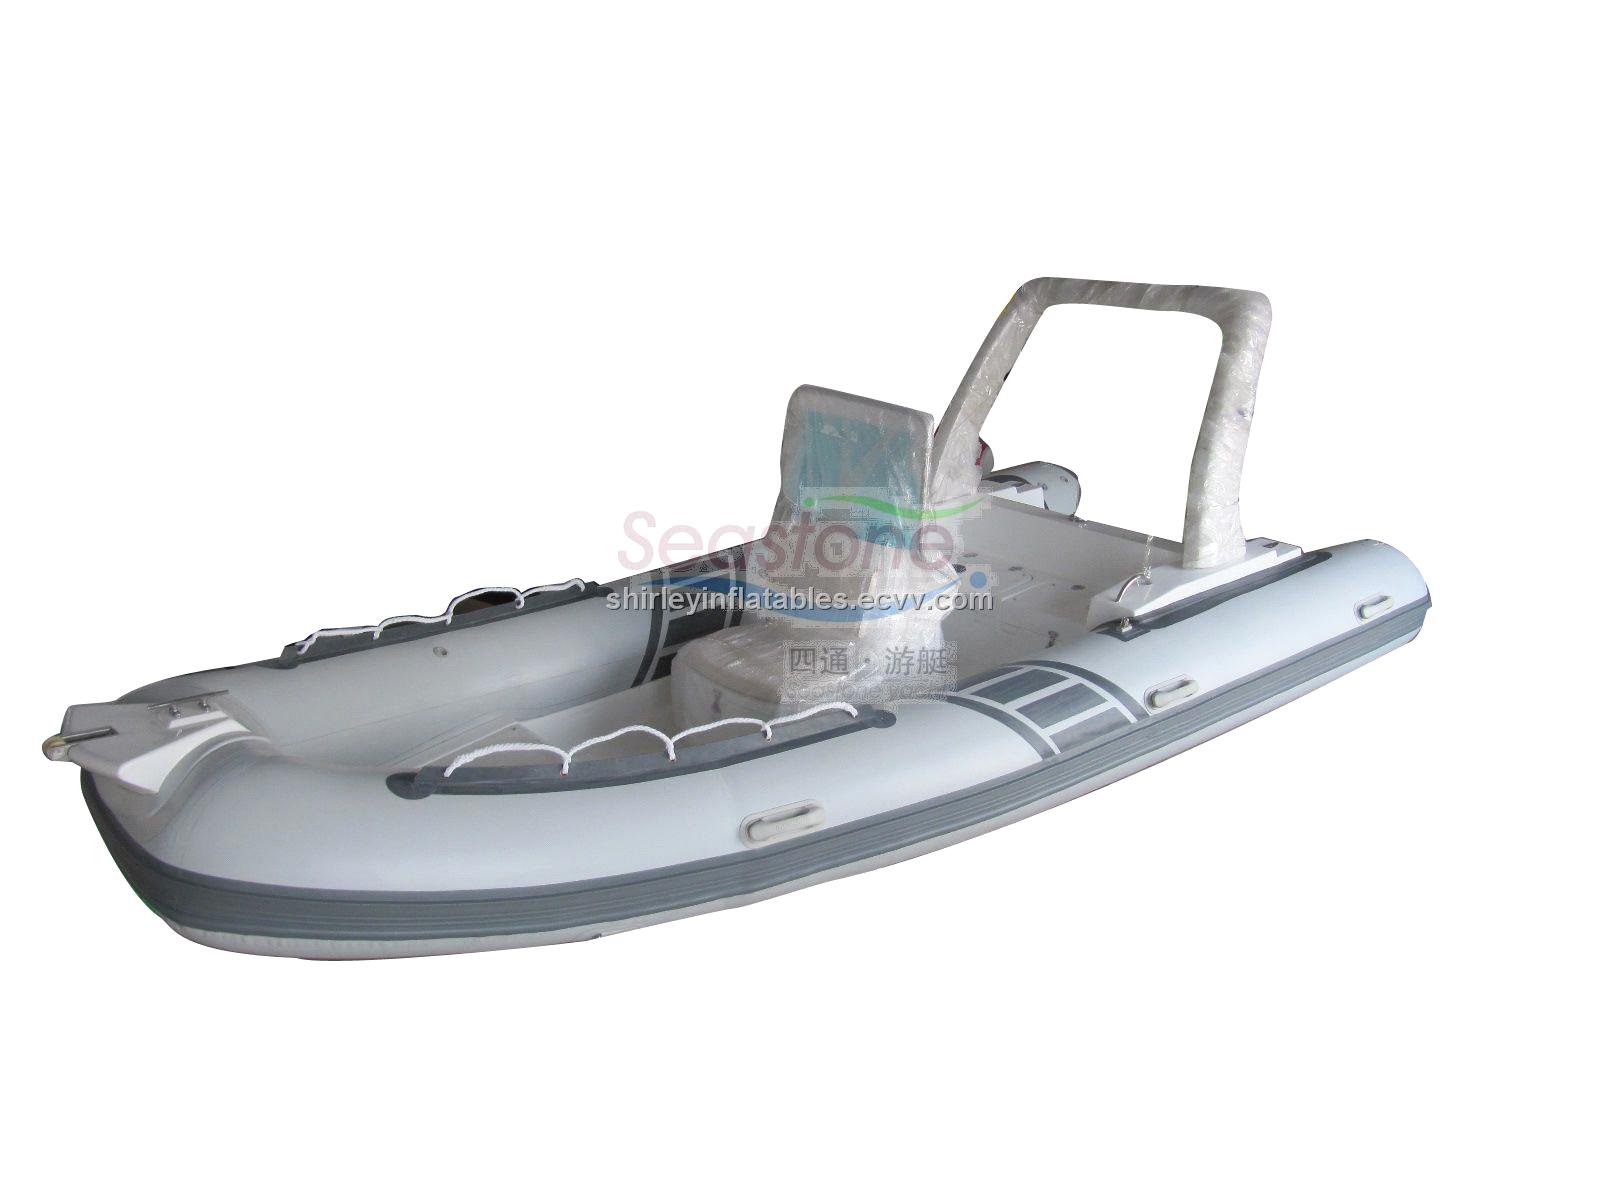  Products Catalog &gt; (CE) RIB520C Fiberglass Hull Rigid Inflatable Boat